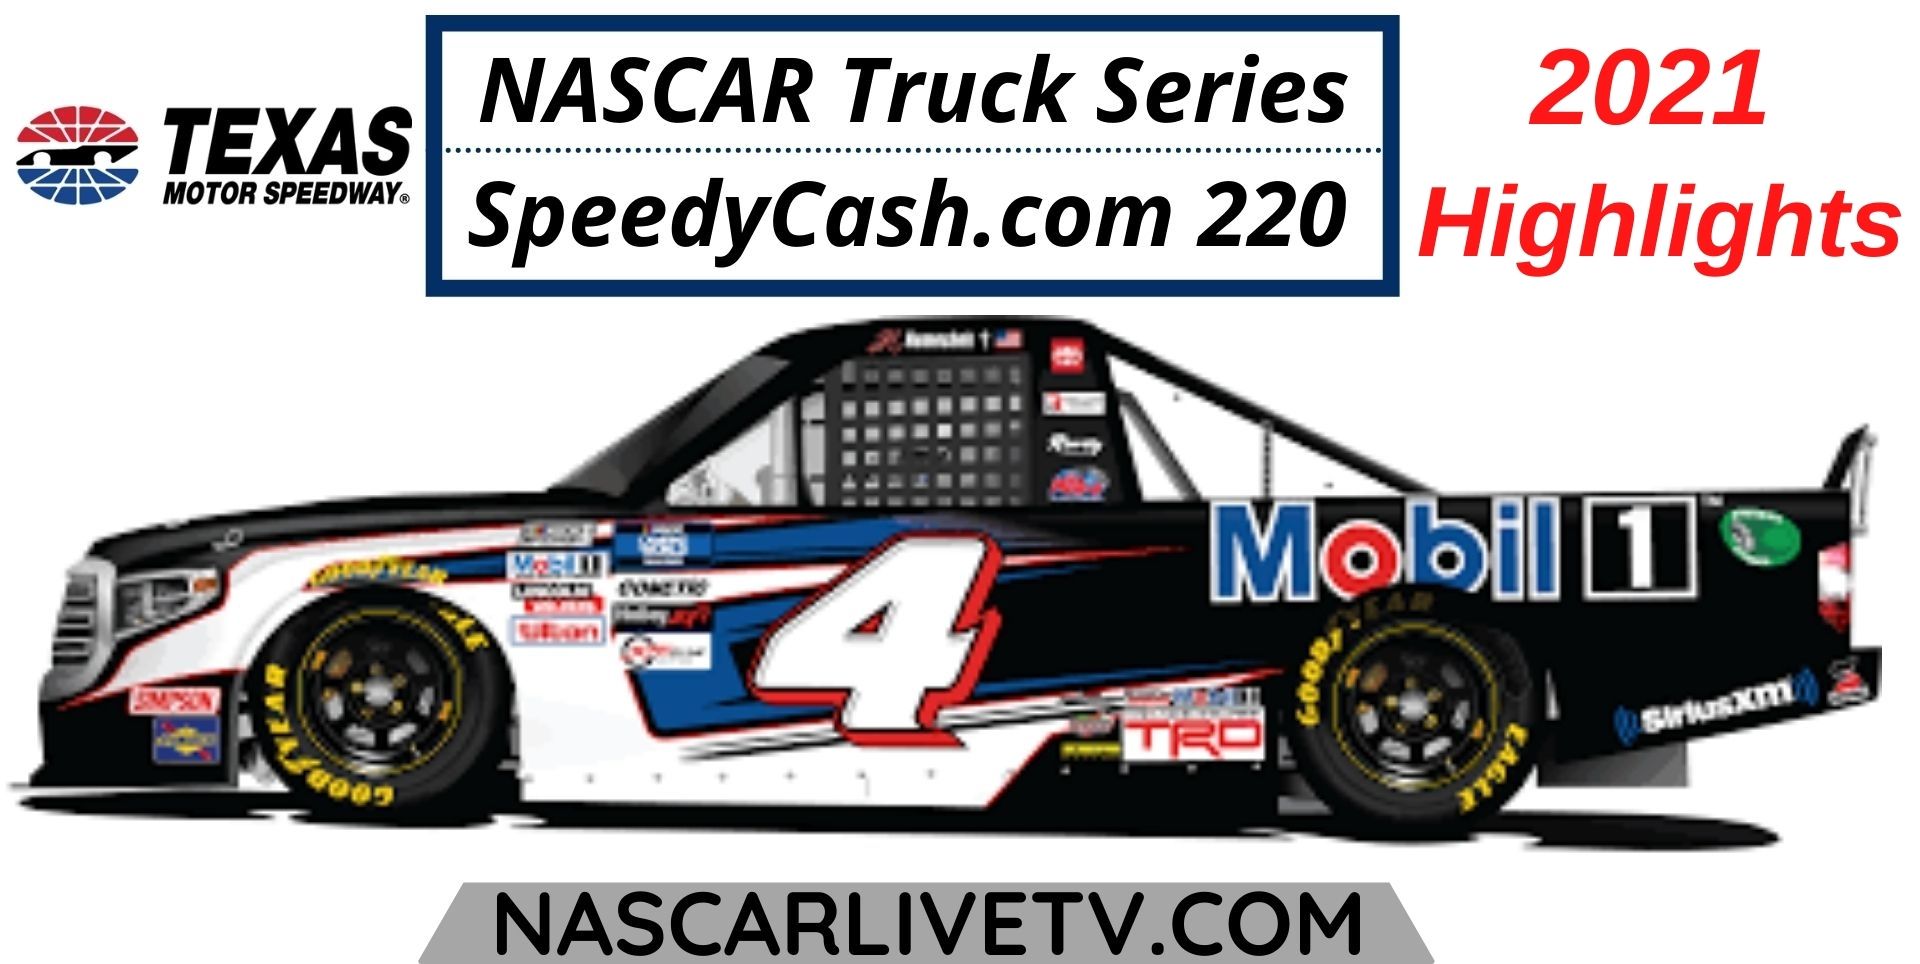 SpeedyCash Com 220 Highlights NASCAR Truck Series 2021